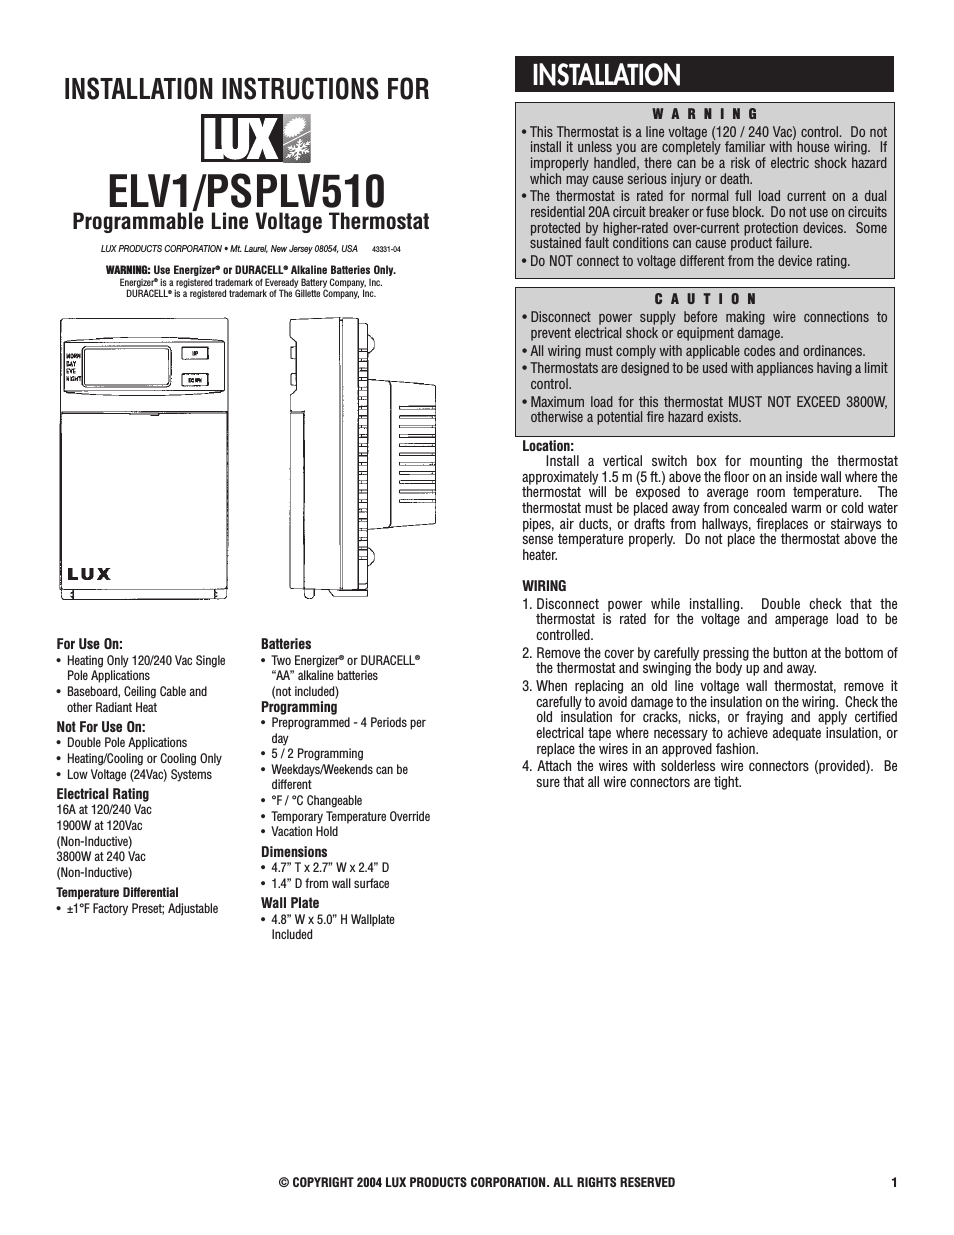 ELV1/PSPLV510